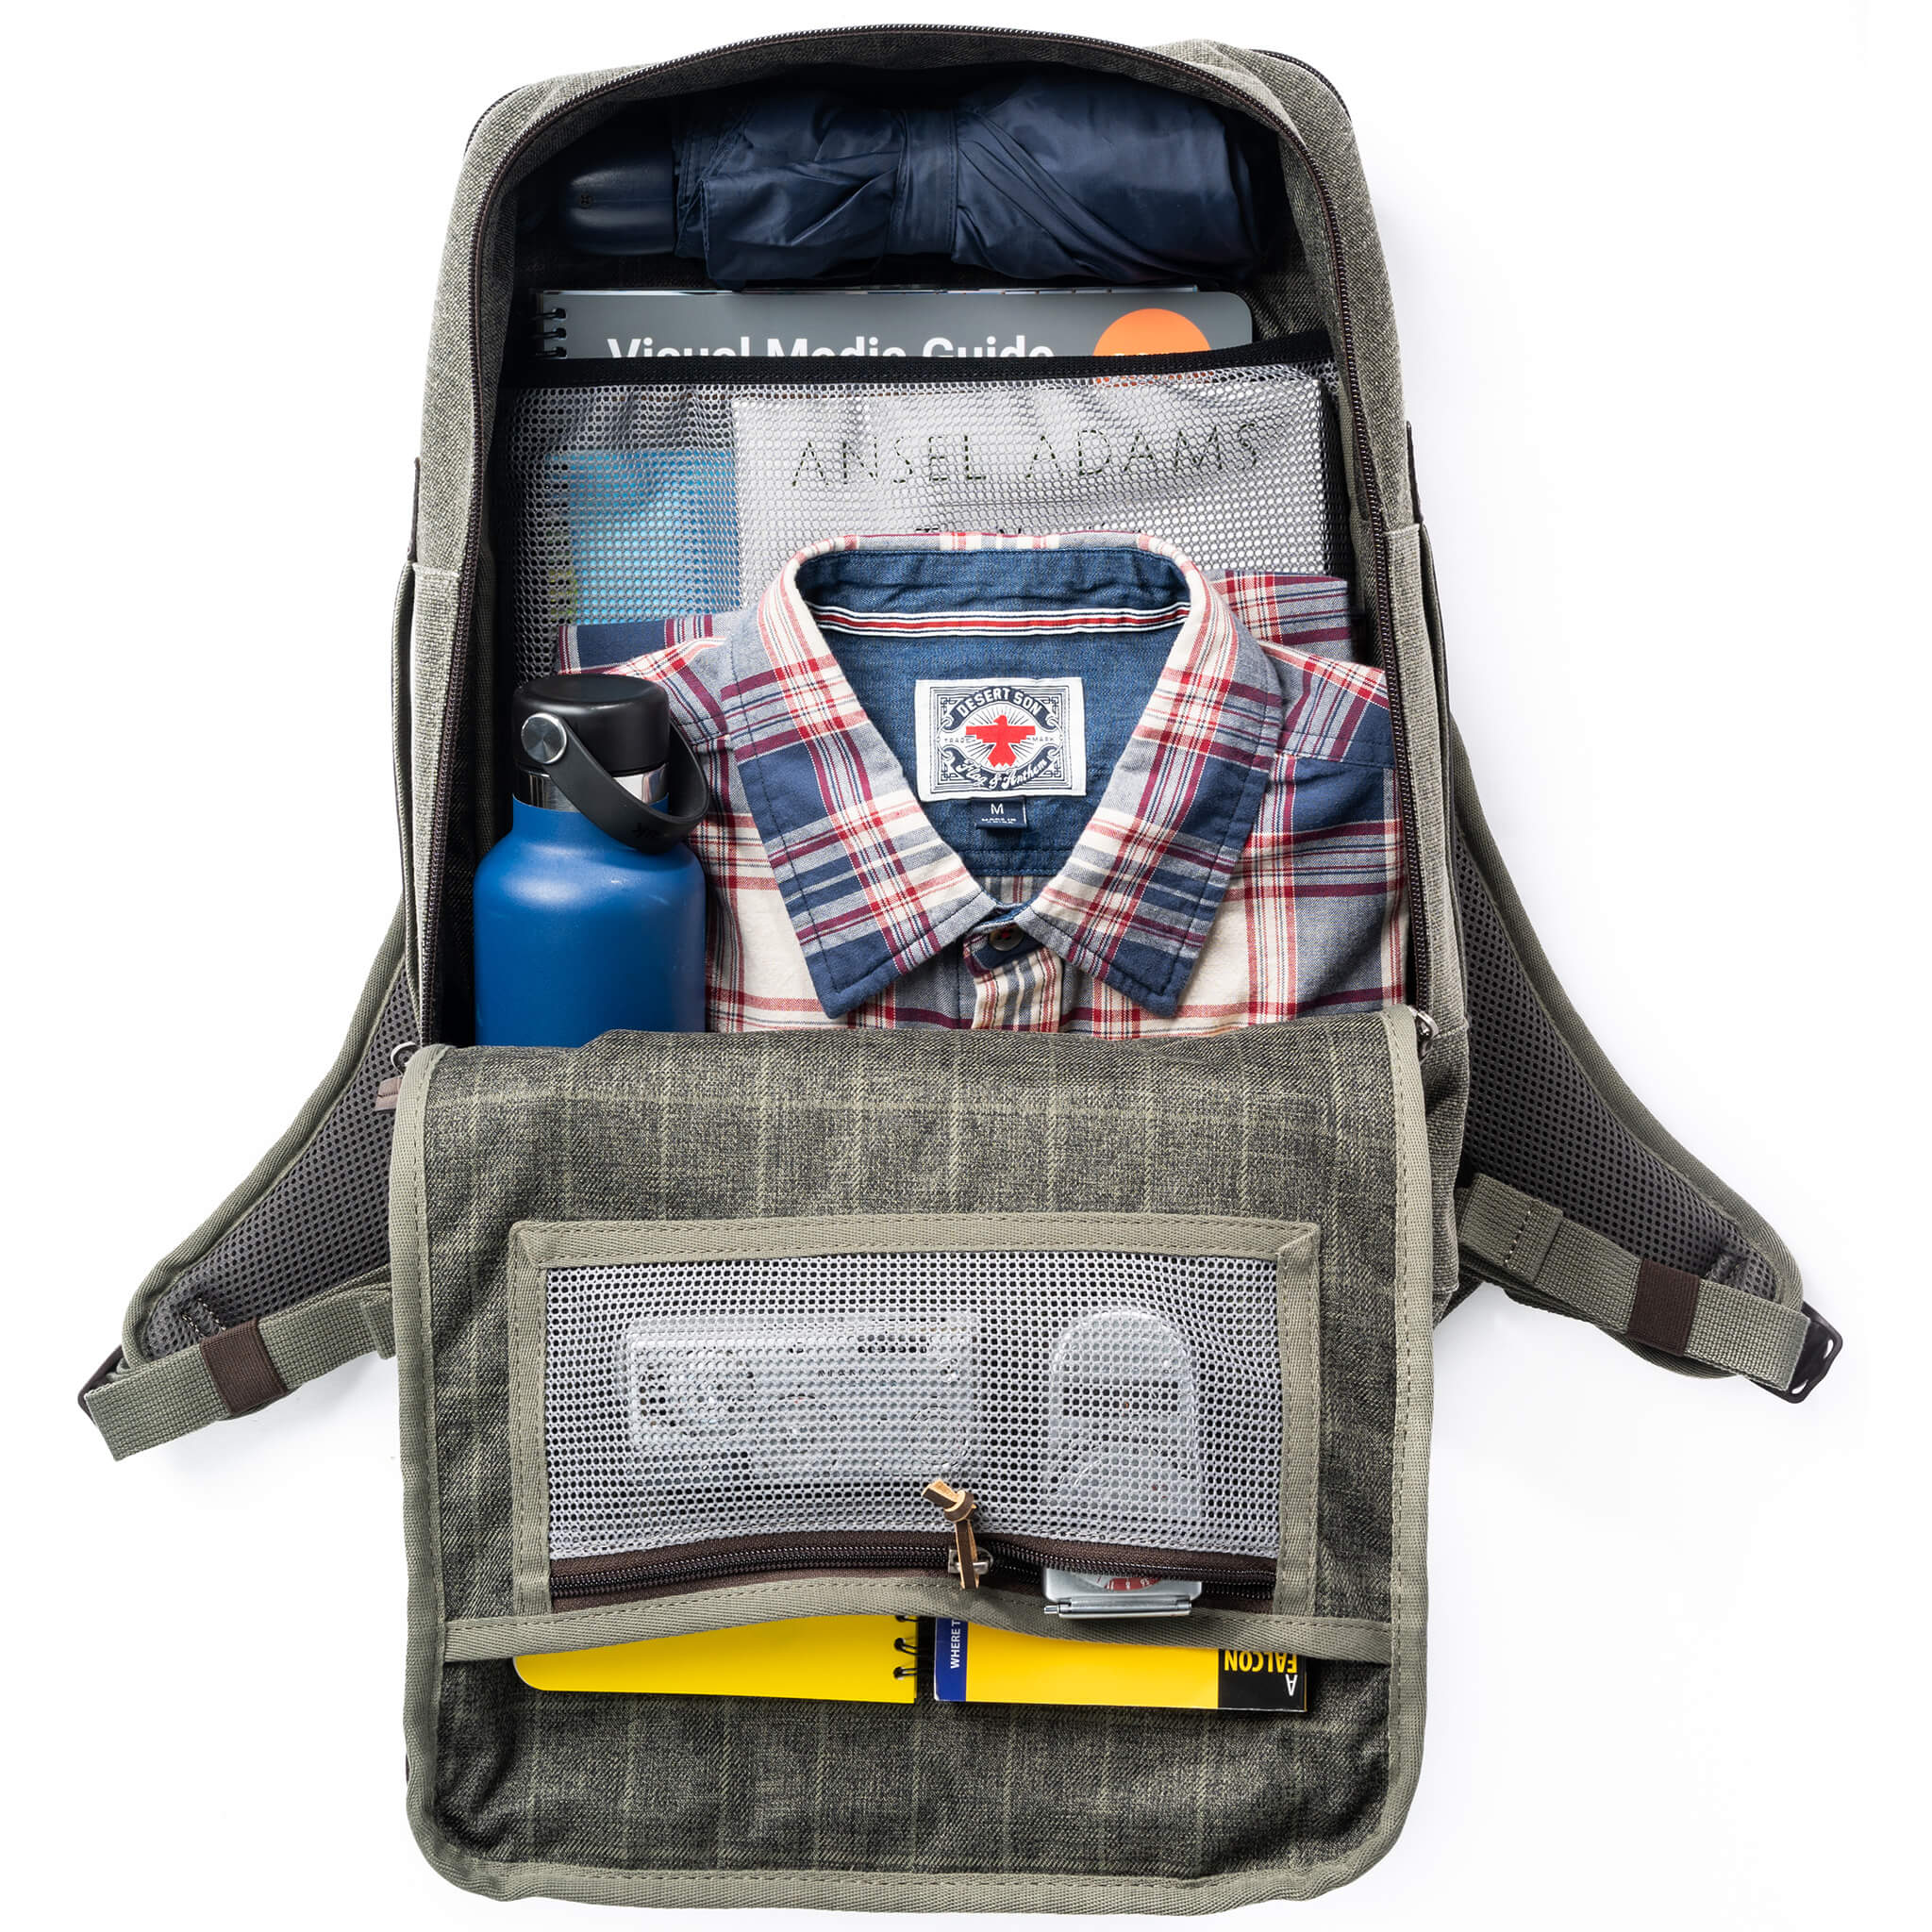 Fabric Backpack Lenovo Laptop Bag, Capacity: 1 Kg